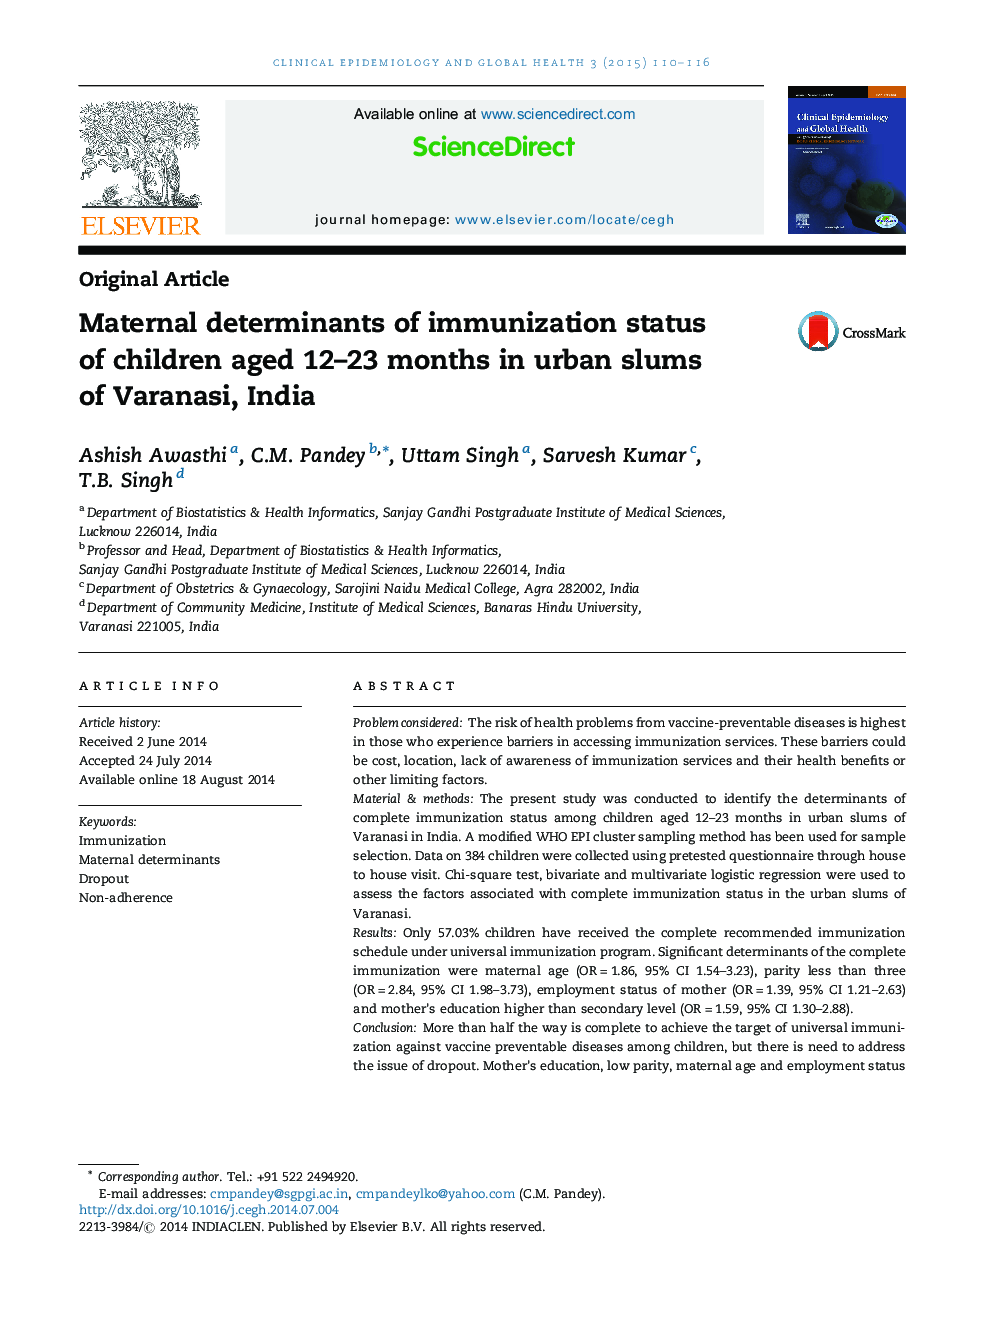 Maternal determinants of immunization status of children aged 12–23 months in urban slums of Varanasi, India